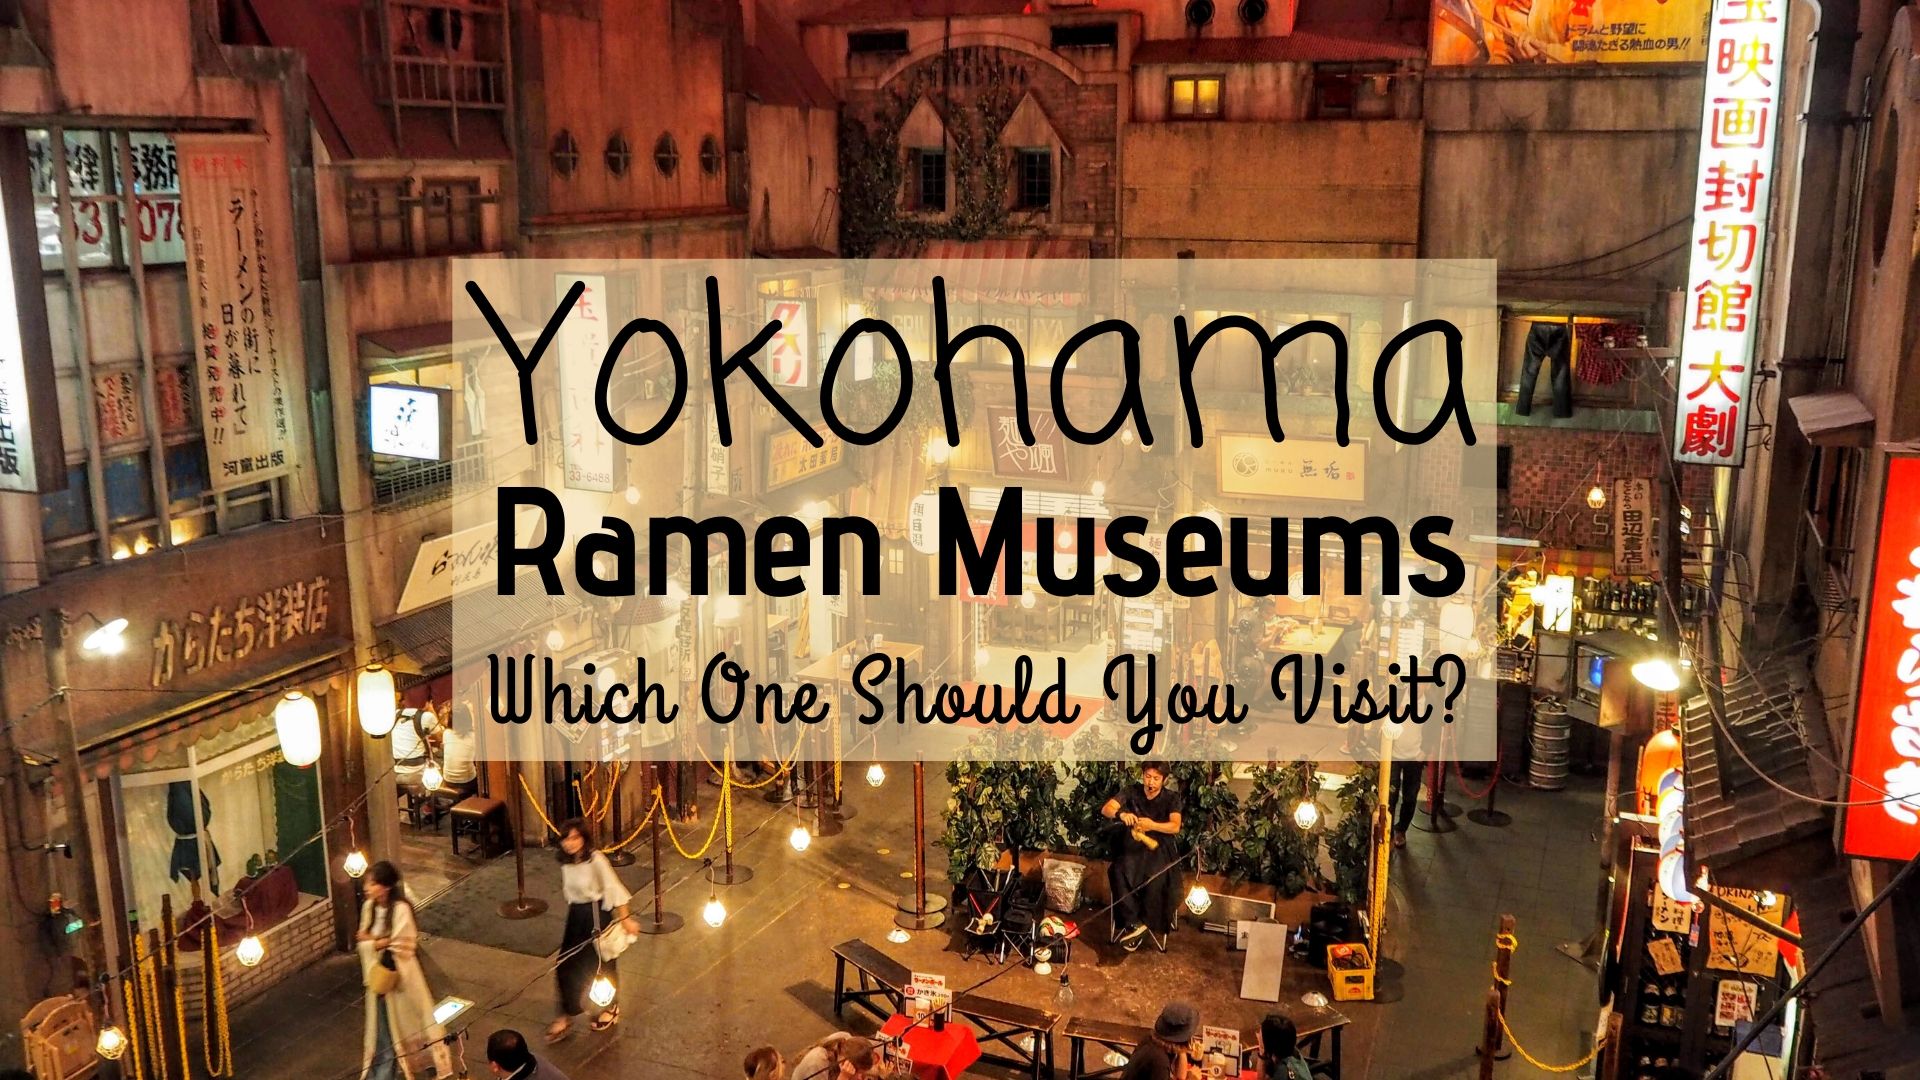 Yokohama cup noodles museum vs shin yokohama ramen museum, make your own cup noodles, Nissin ramen museum, instant ramen museum, tokyo ramen museum